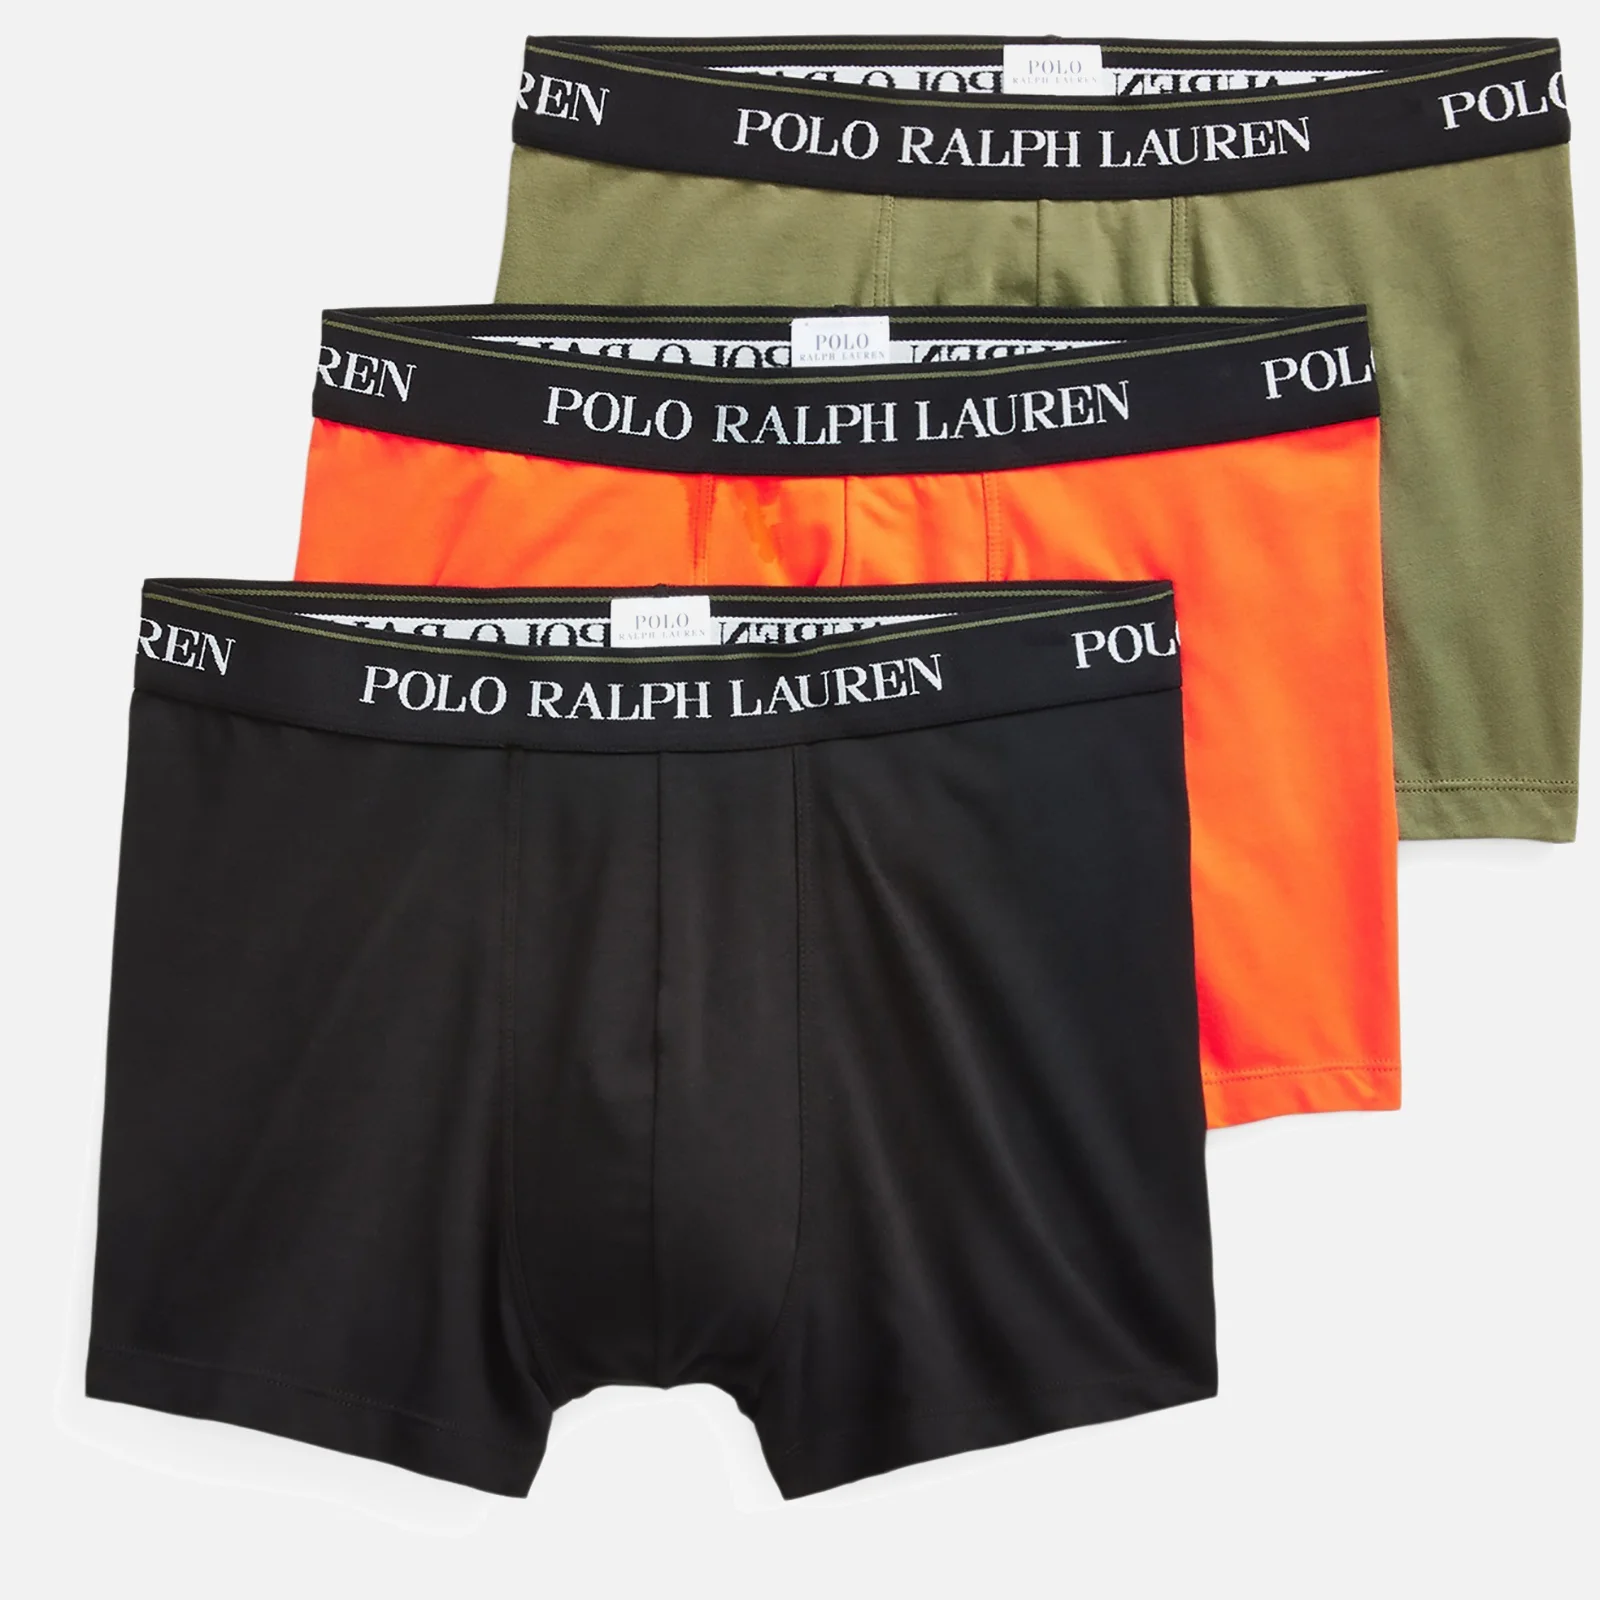 Polo Ralph Lauren Men's 3-Pack Classic Trunks - Black/Sailing Orange/Army Olive Image 1